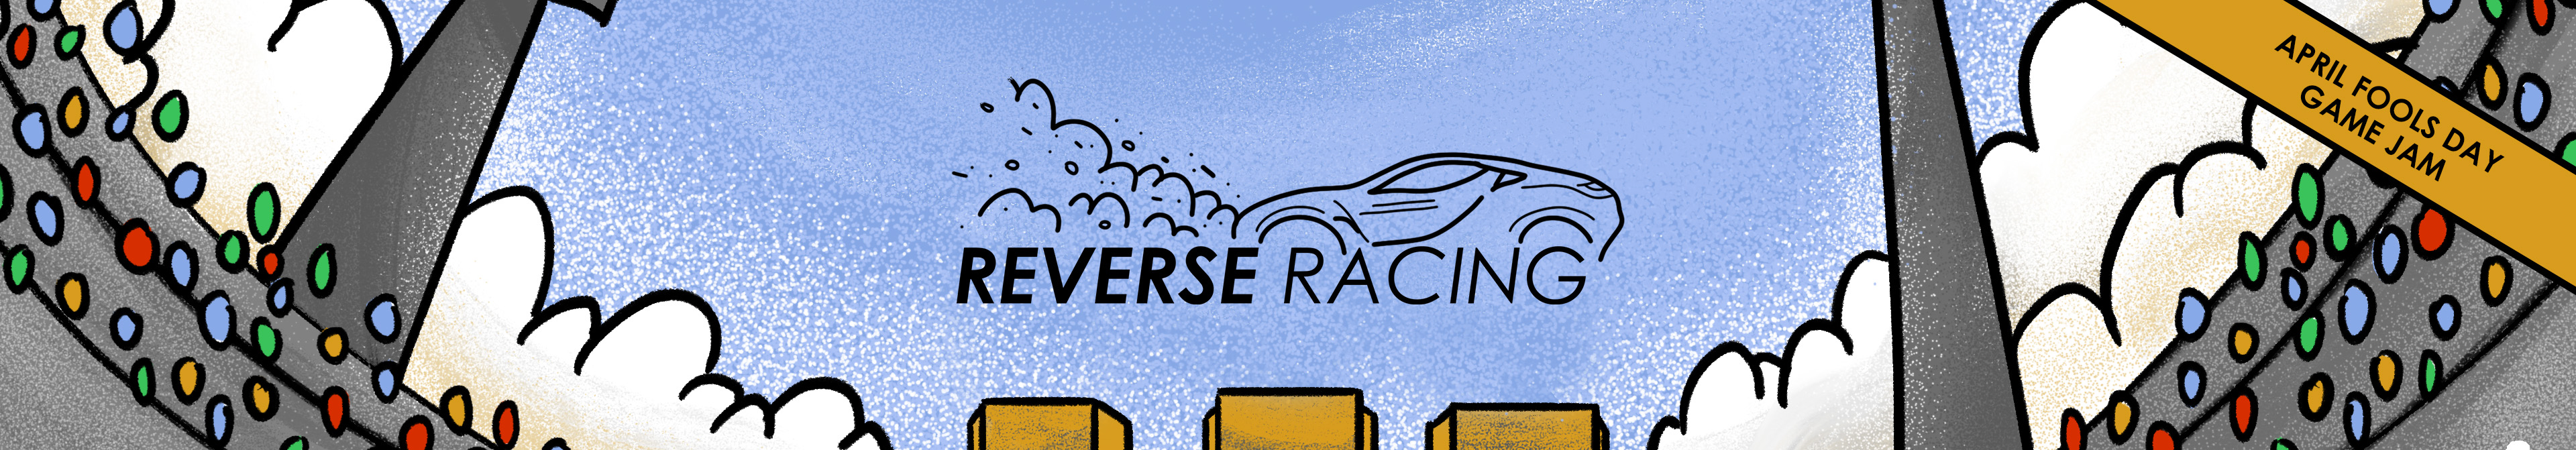 Reverse Racing